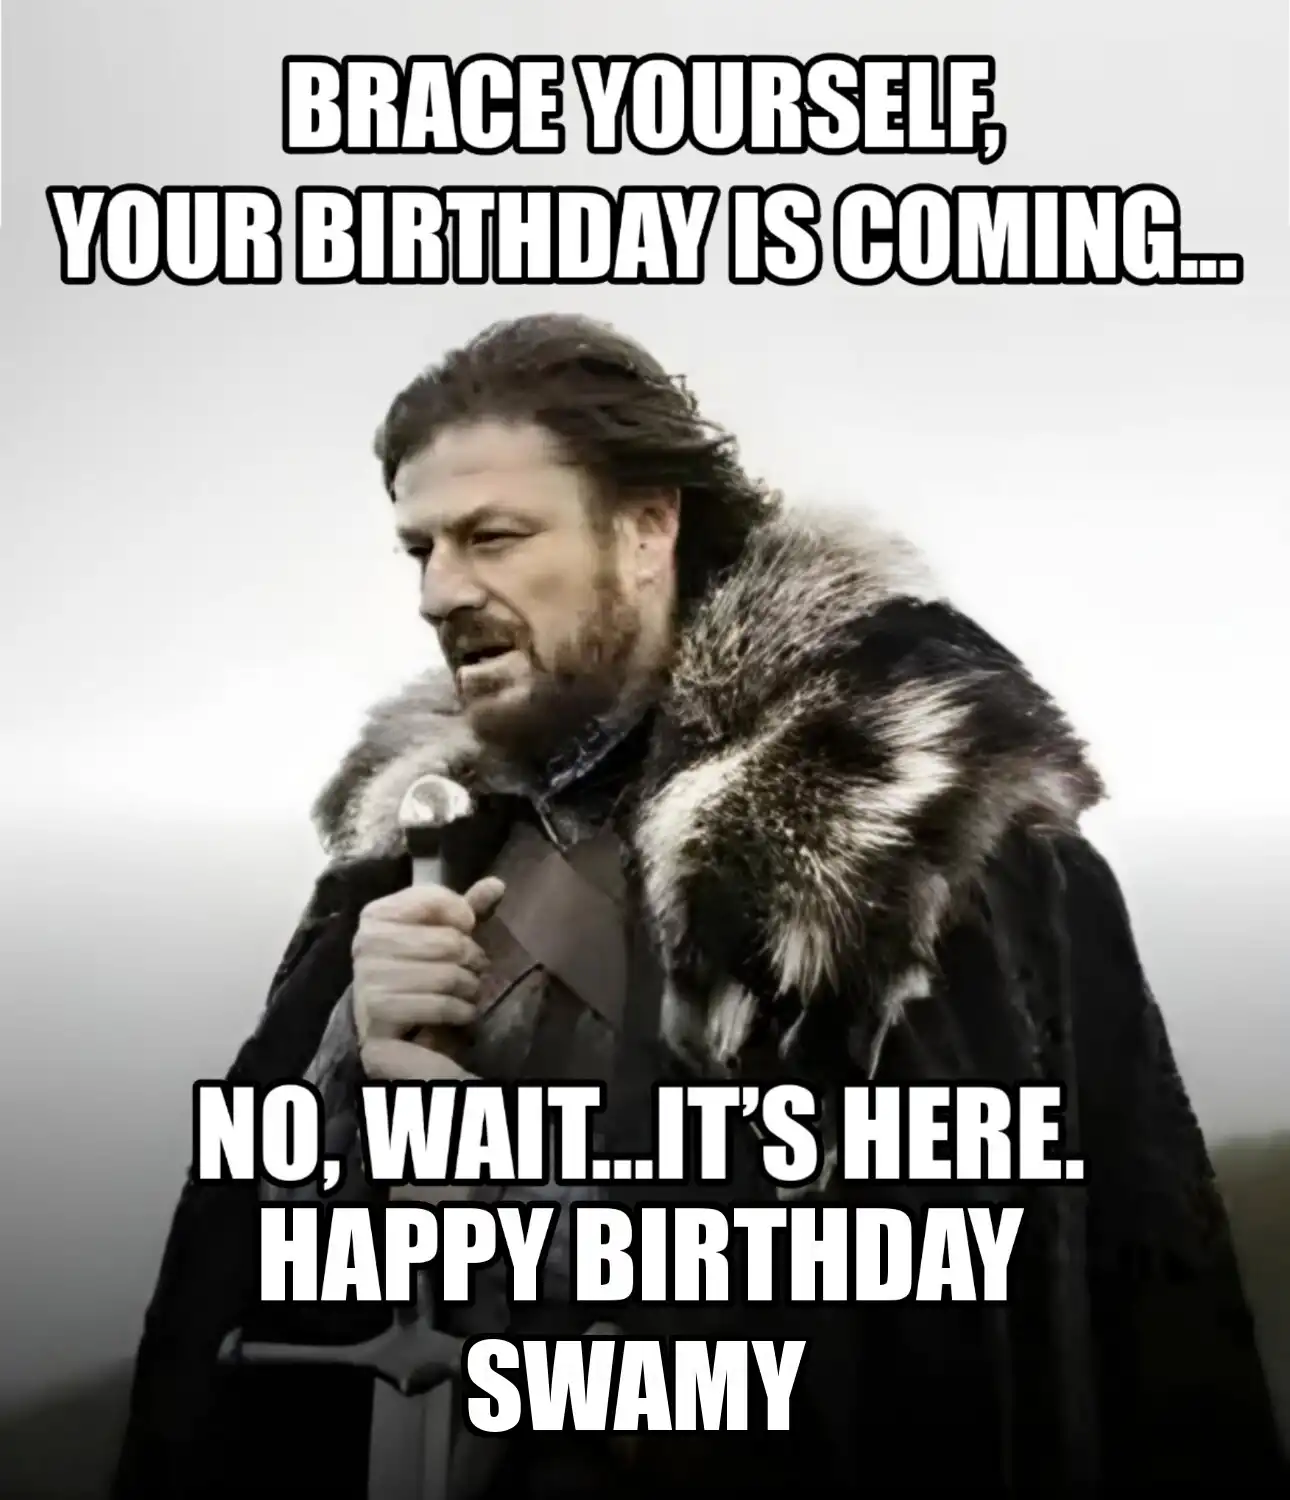 Happy Birthday Swamy Brace Yourself Your Birthday Is Coming Meme